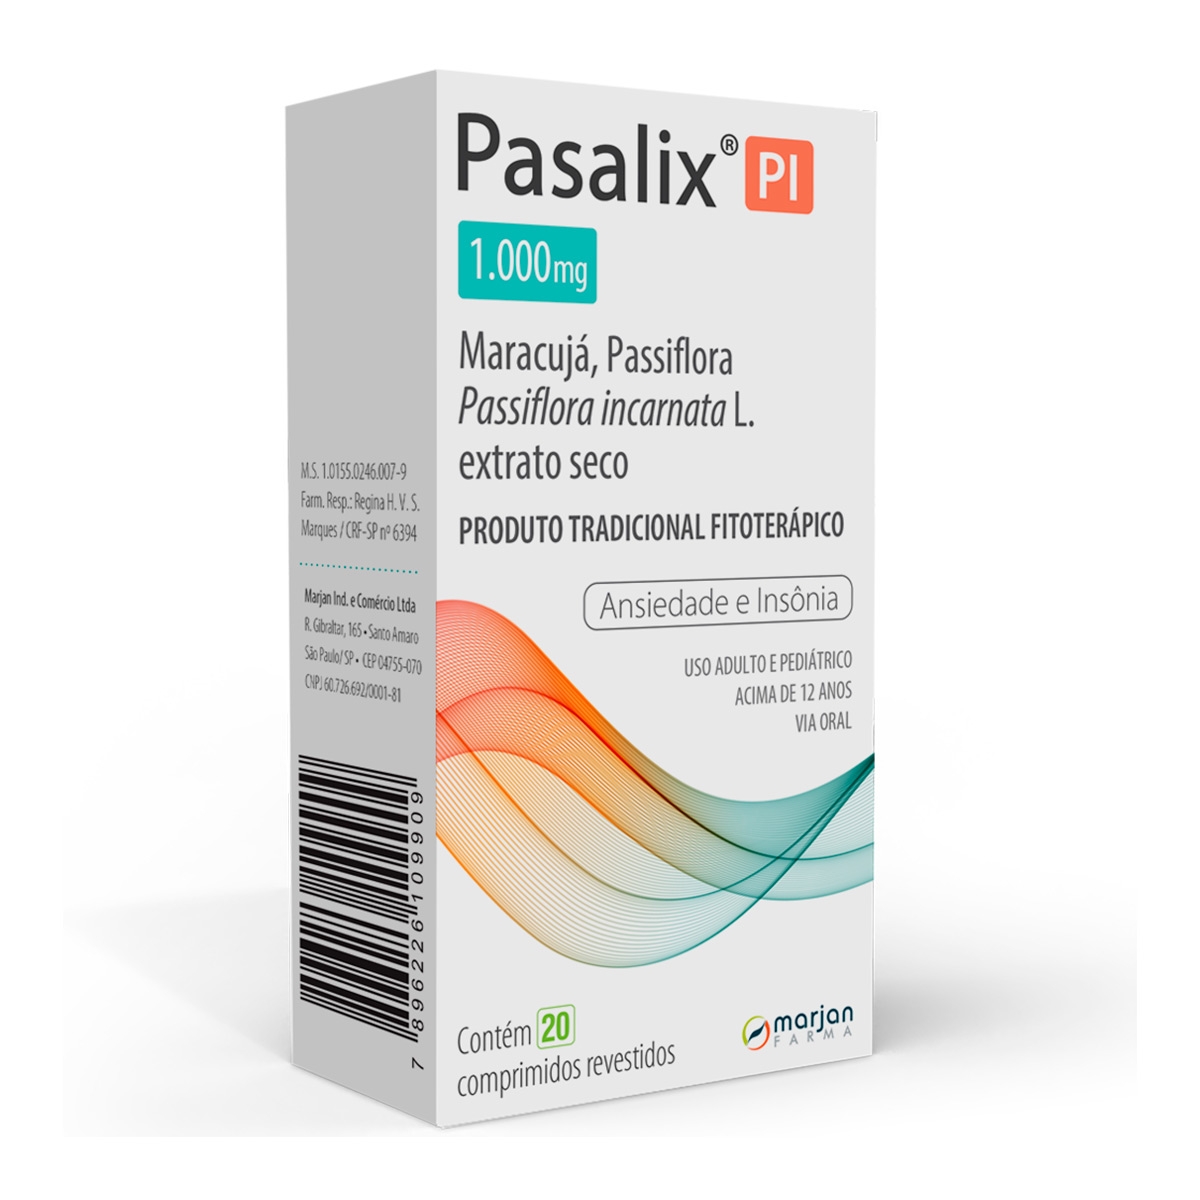 Pasalix PI Passiflora Incarnata L1000mg 20 comprimidos